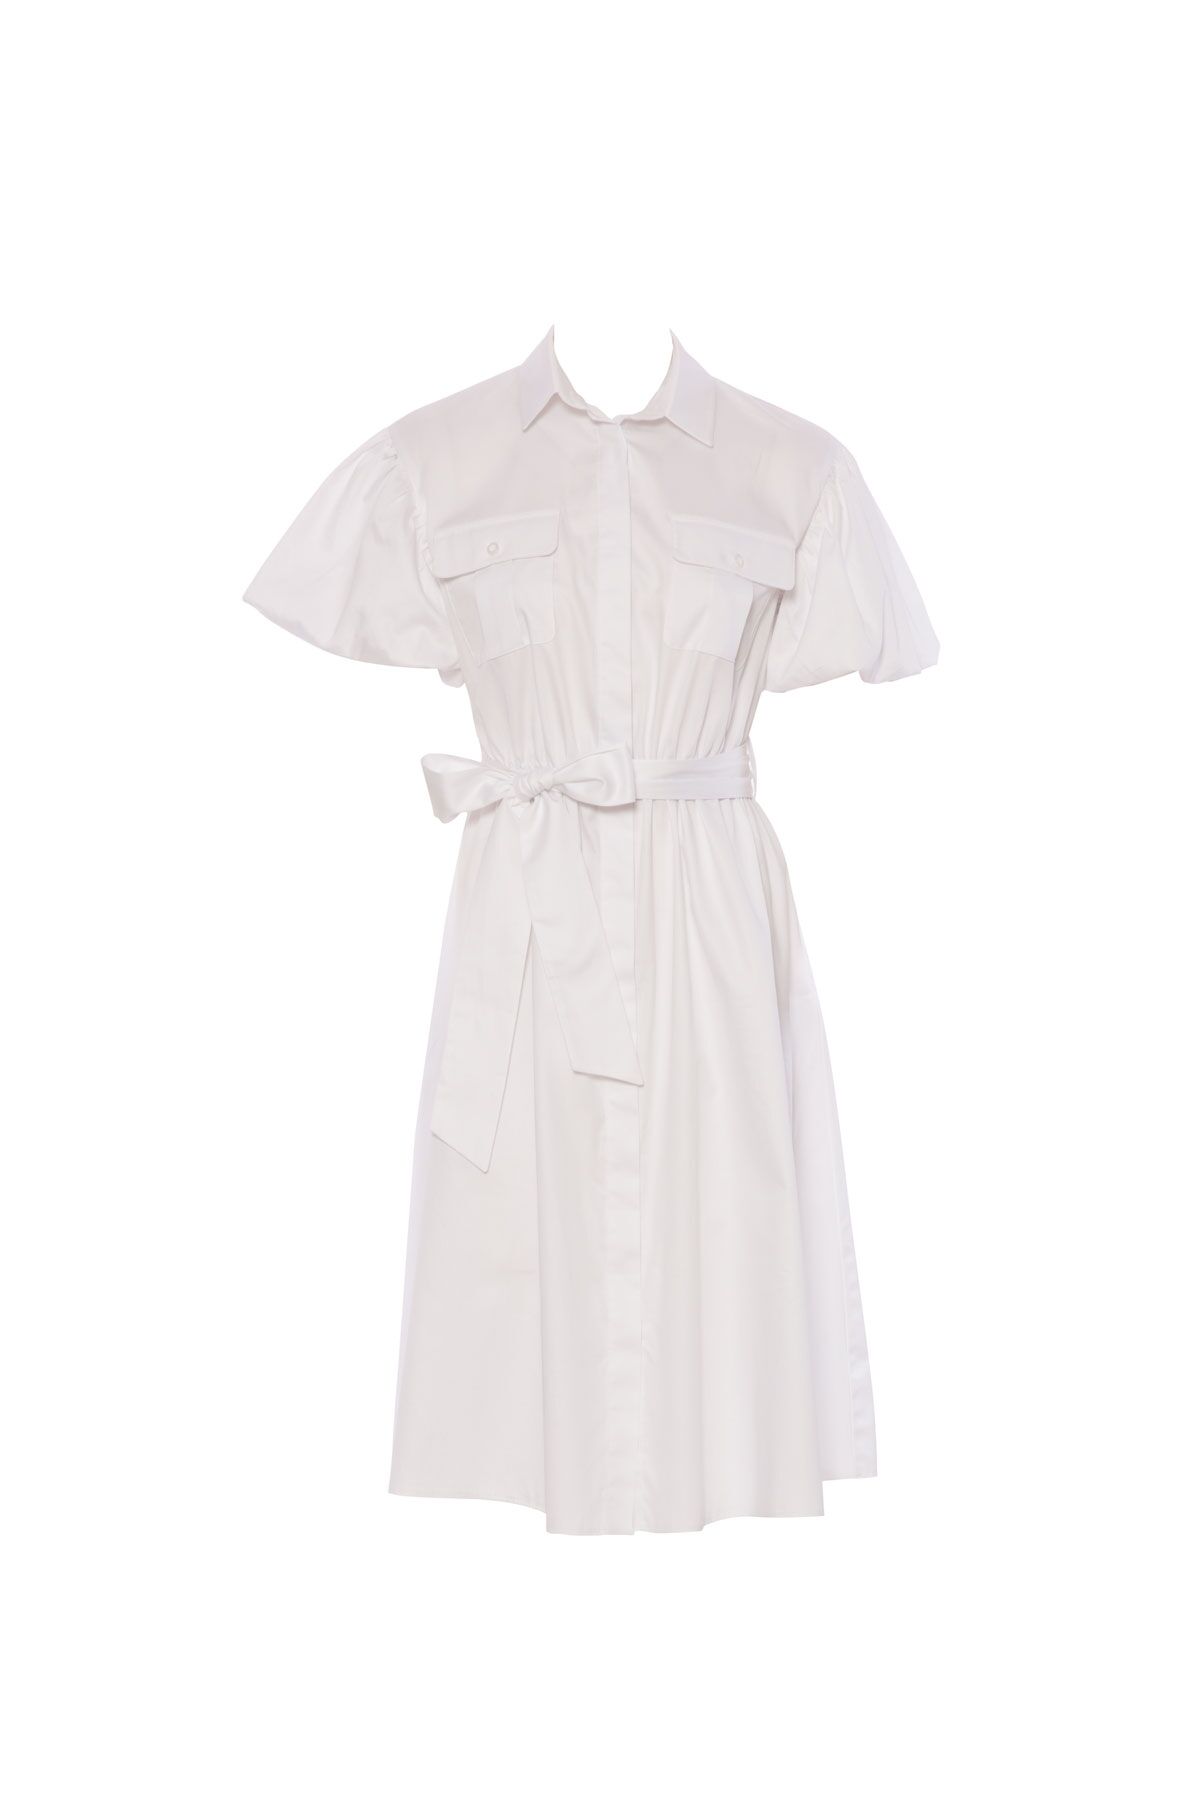 KIWE - Two Pocket Tie Detailed White Poplin Dress